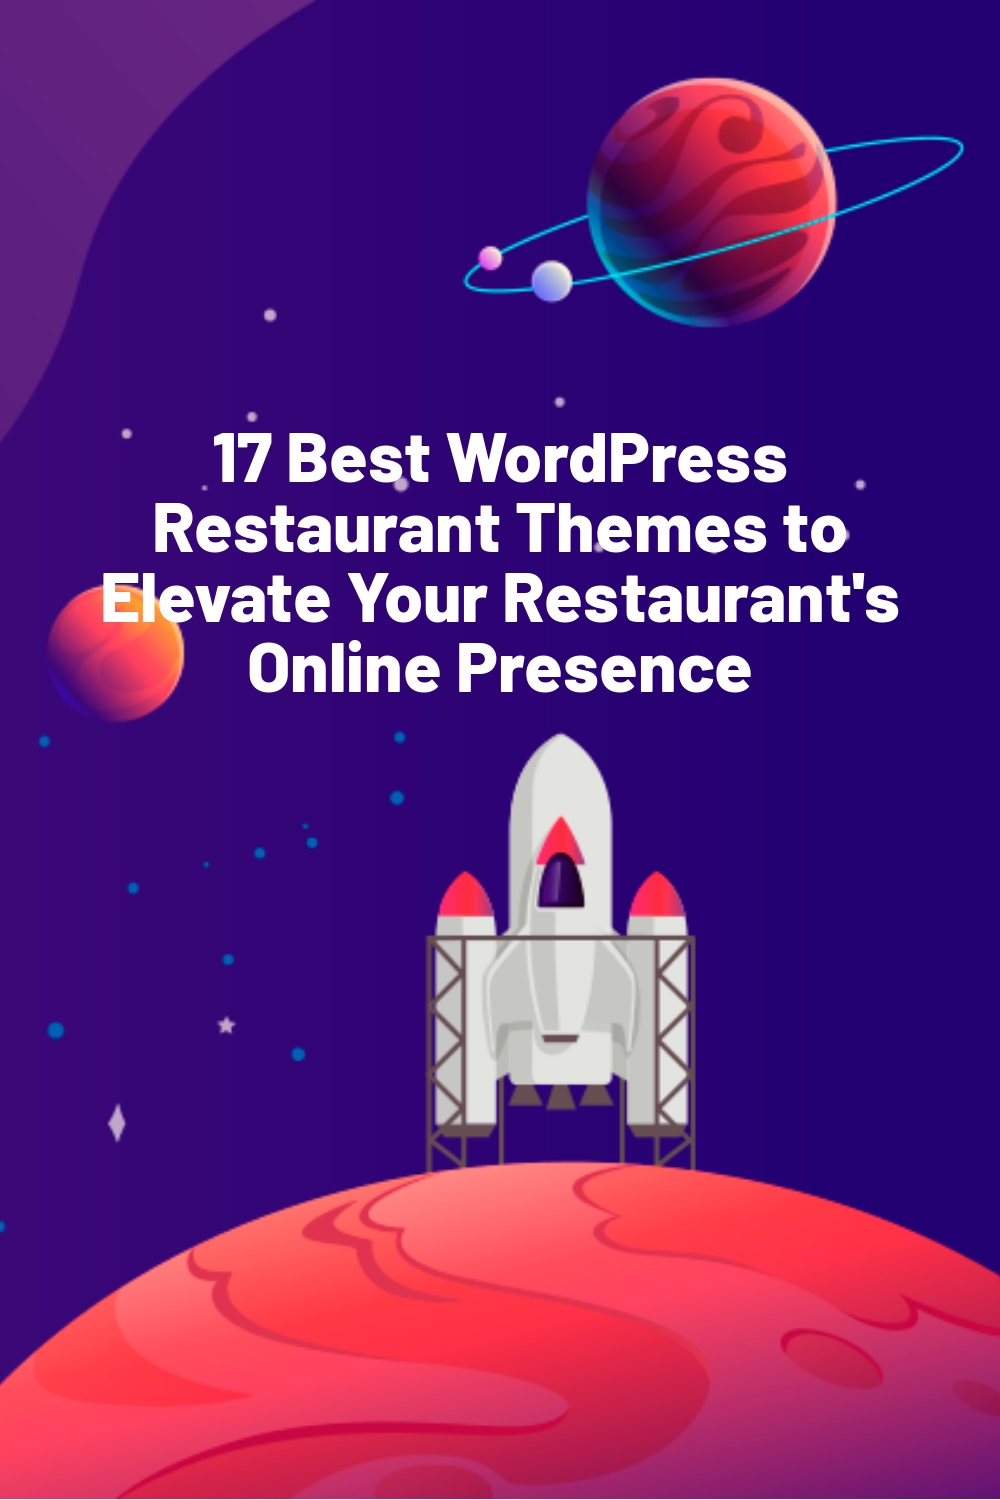 17 Best WordPress Restaurant Themes to Elevate Your Restaurant’s Online Presence